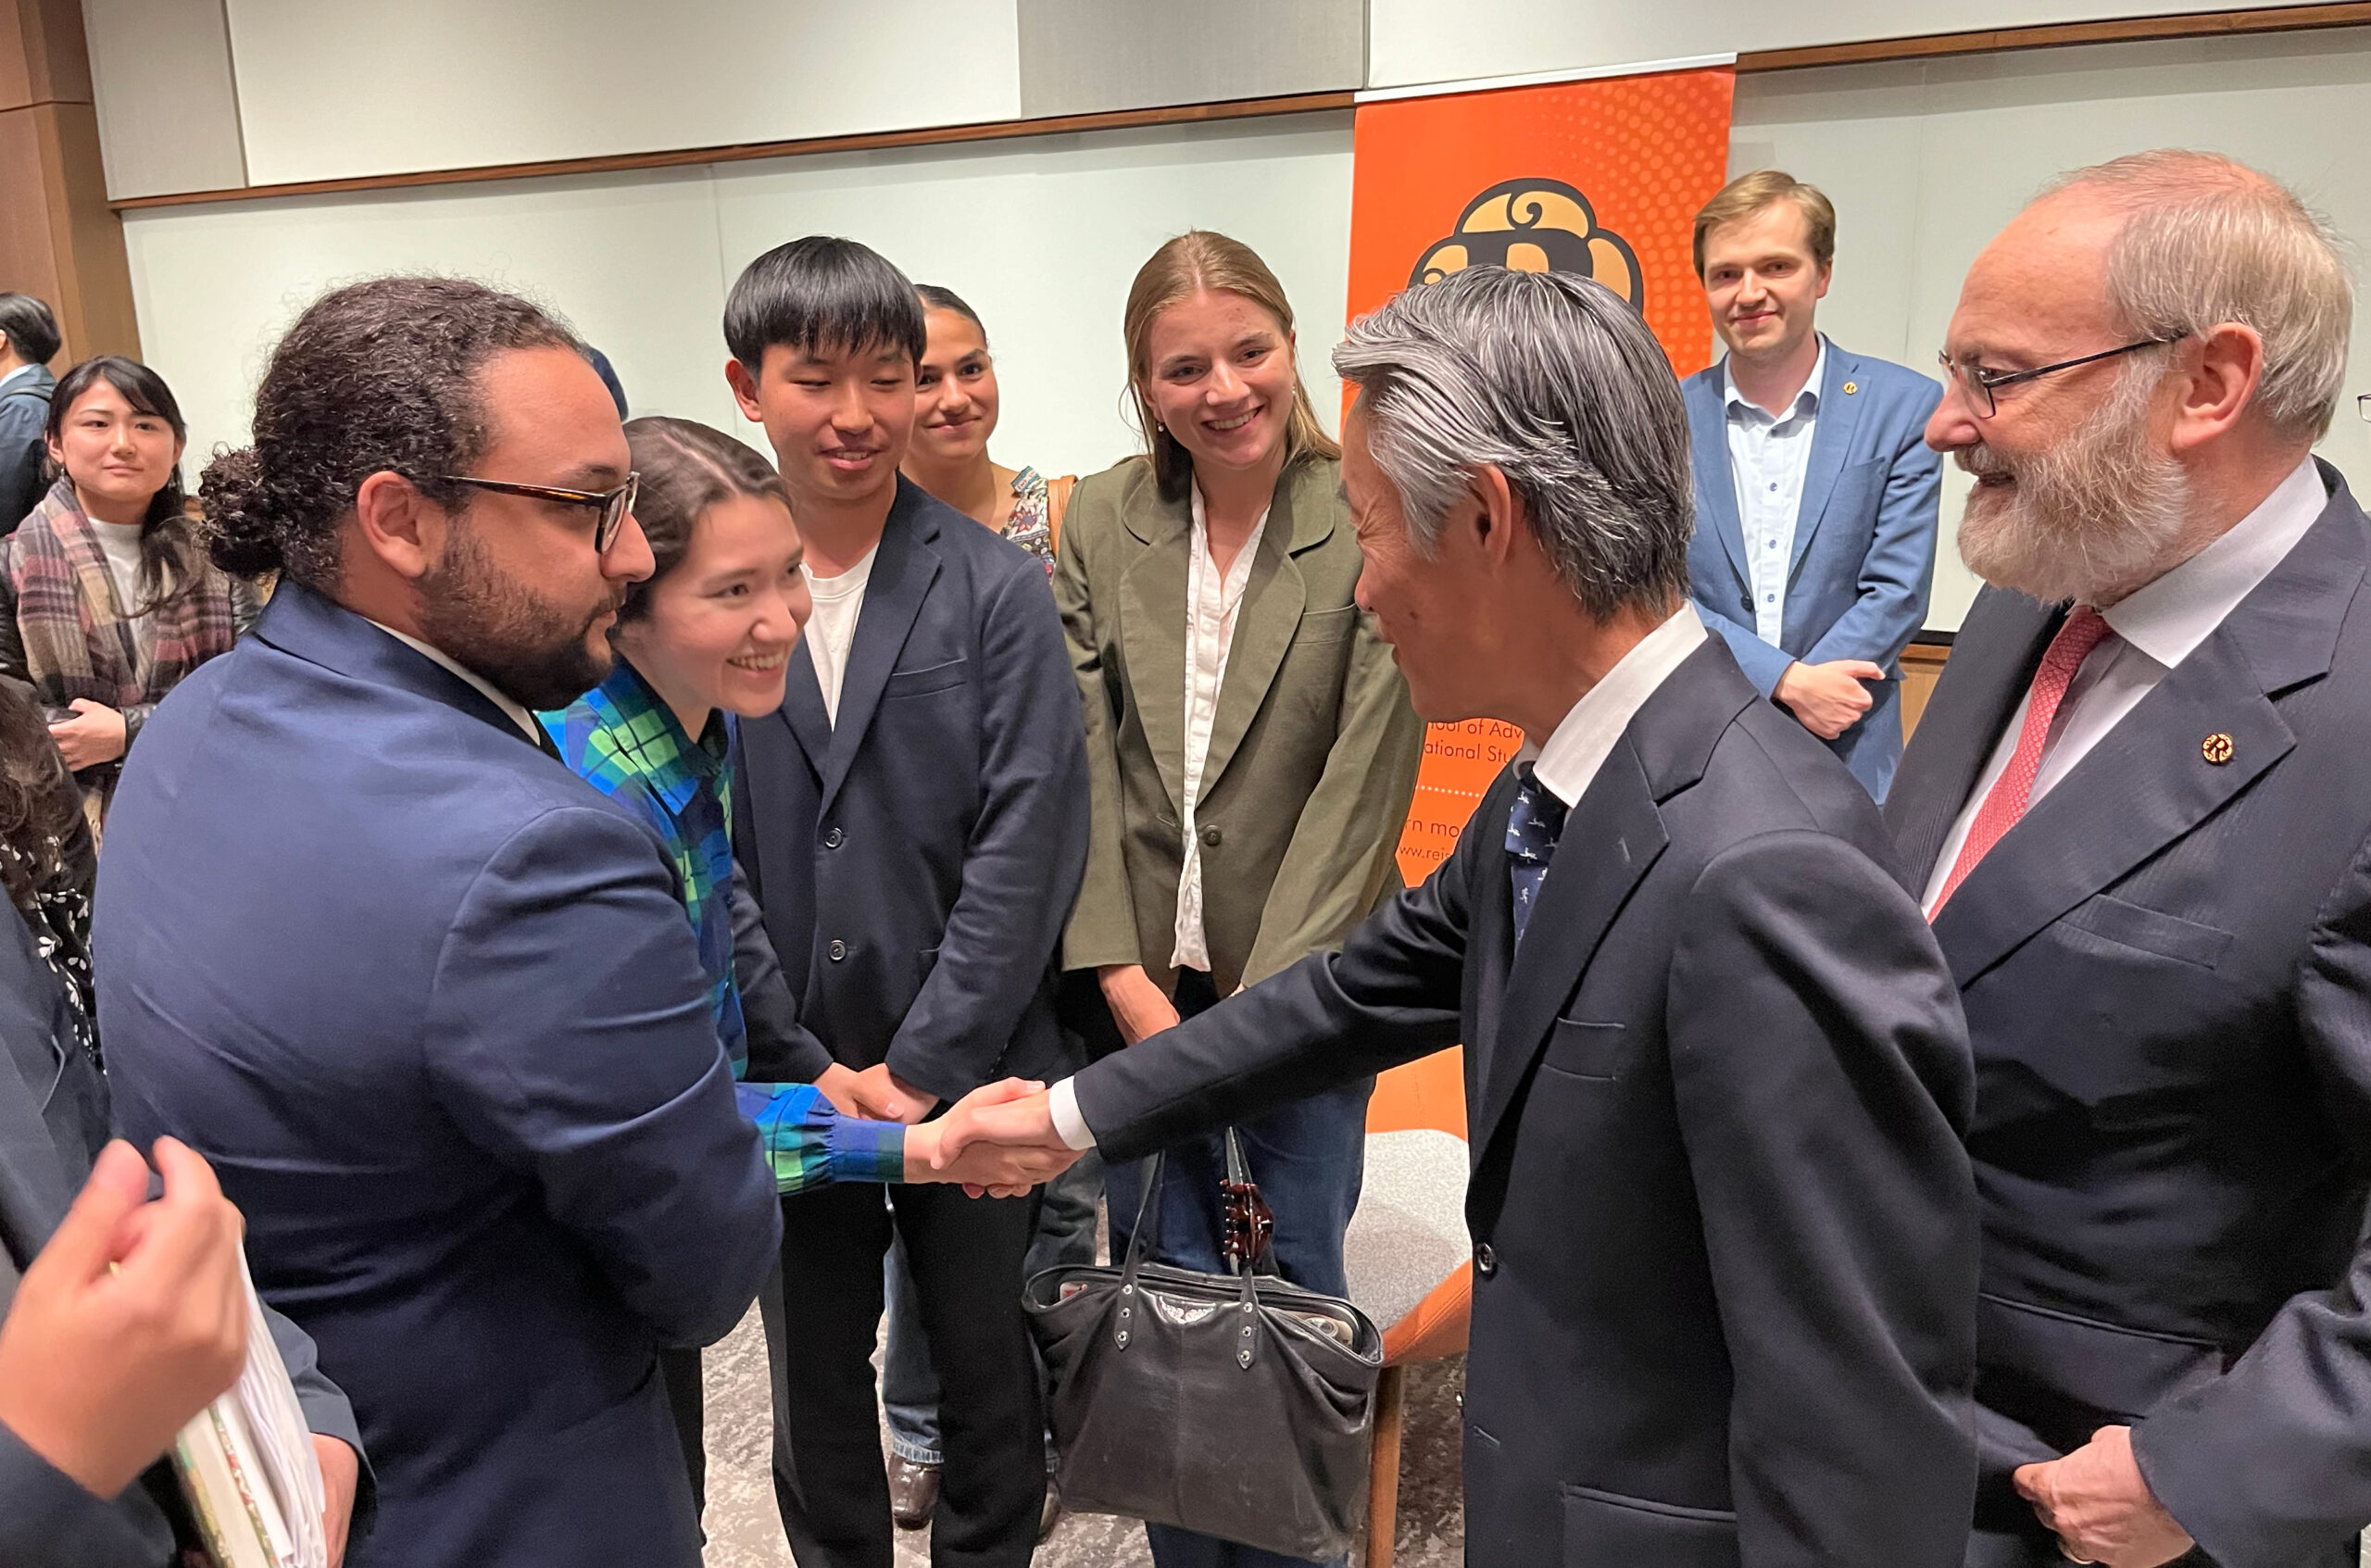 Japan ambassador Shigeo Yamada shakes hands with a small group of people